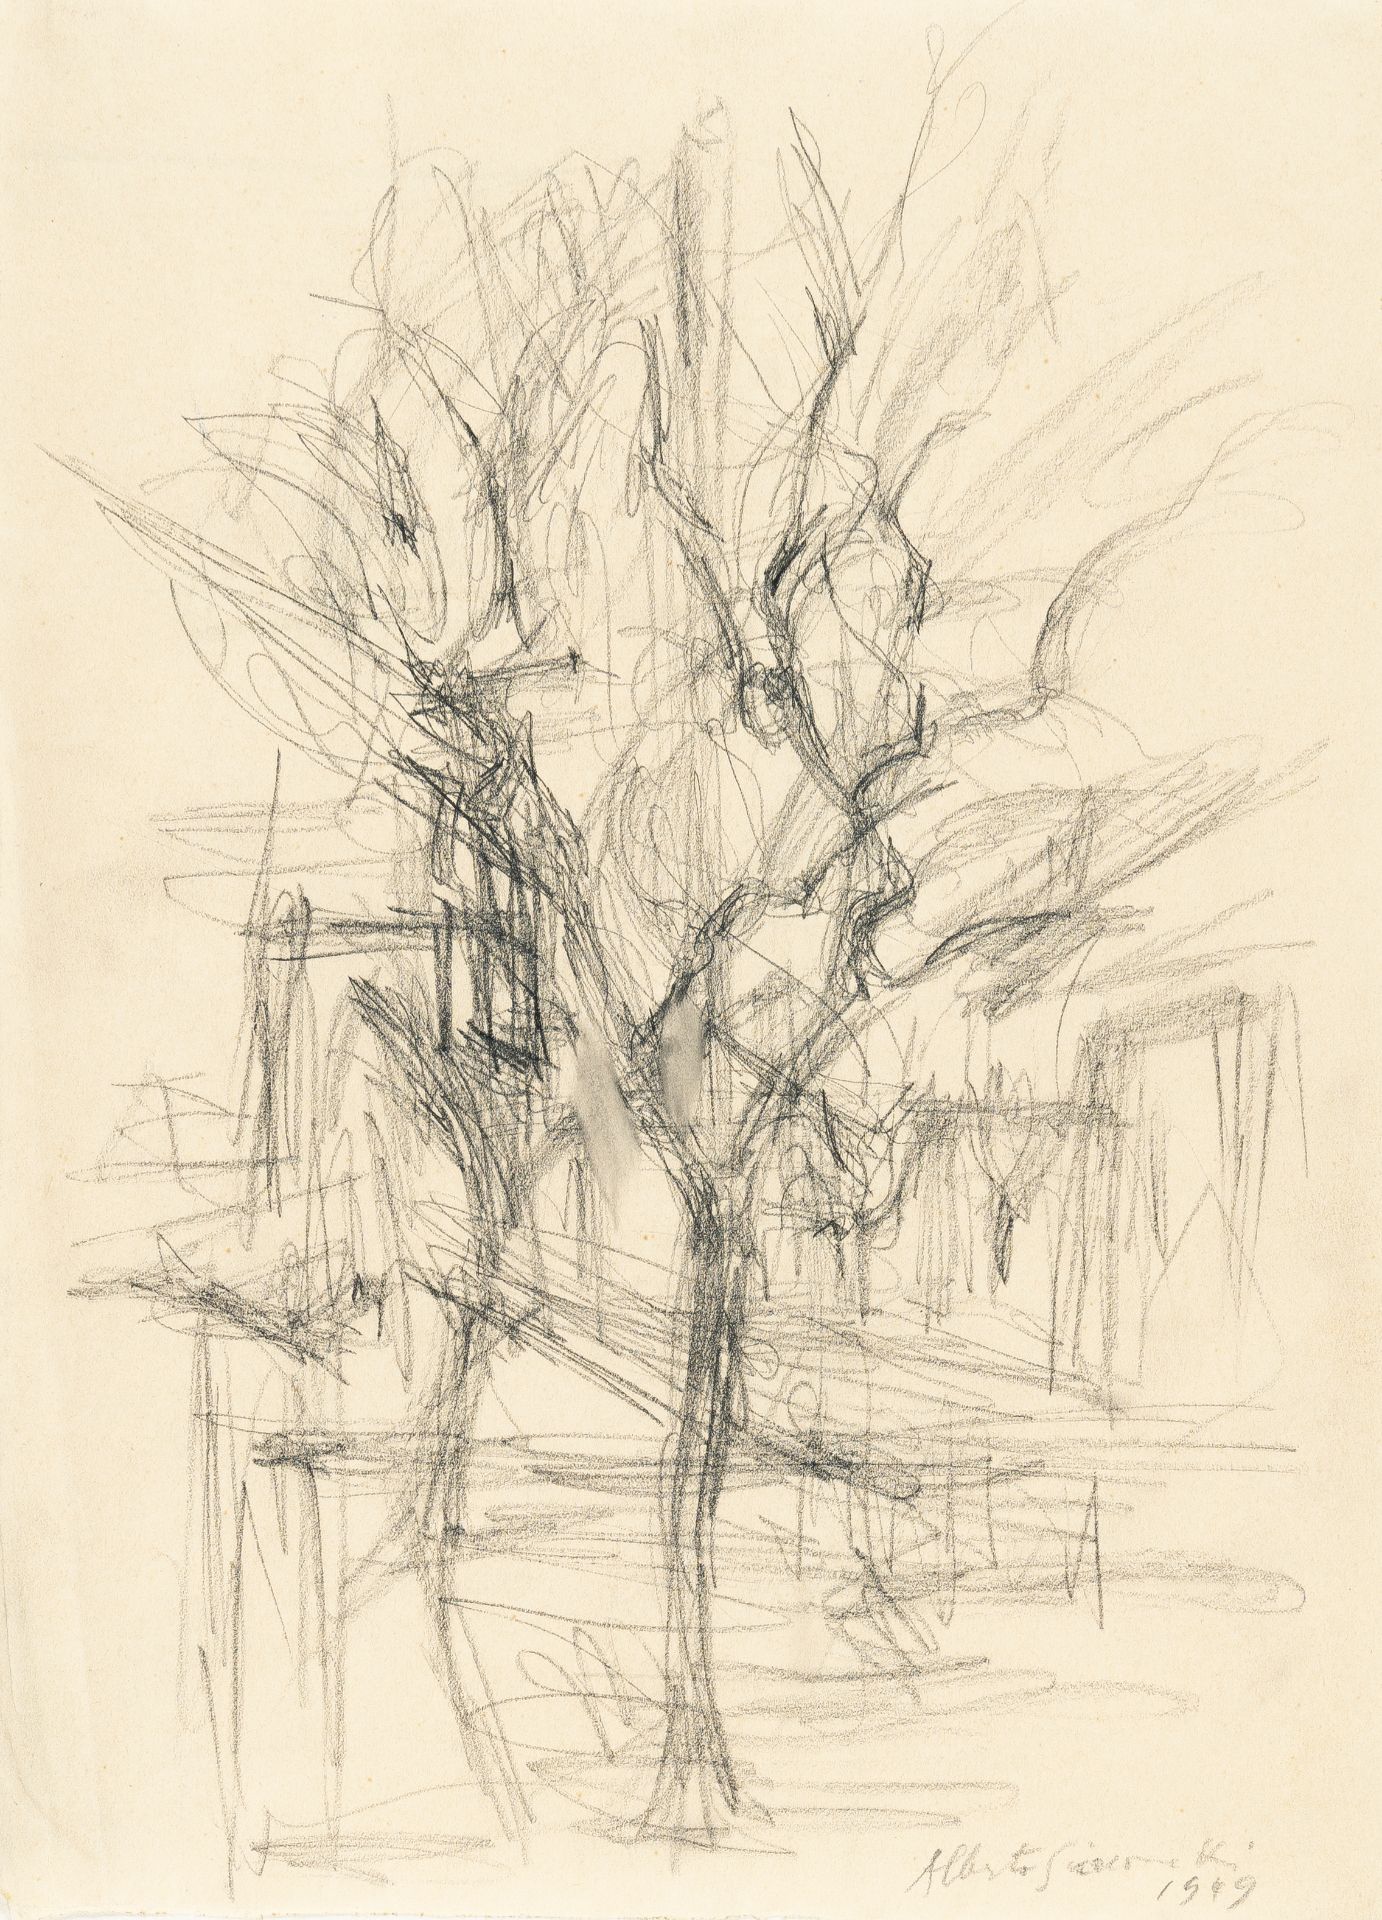 Alberto Giacometti, Arbres.Pencil on cream wove. 1949. Ca. 34.5 x 25 cm. Signed and dated lower